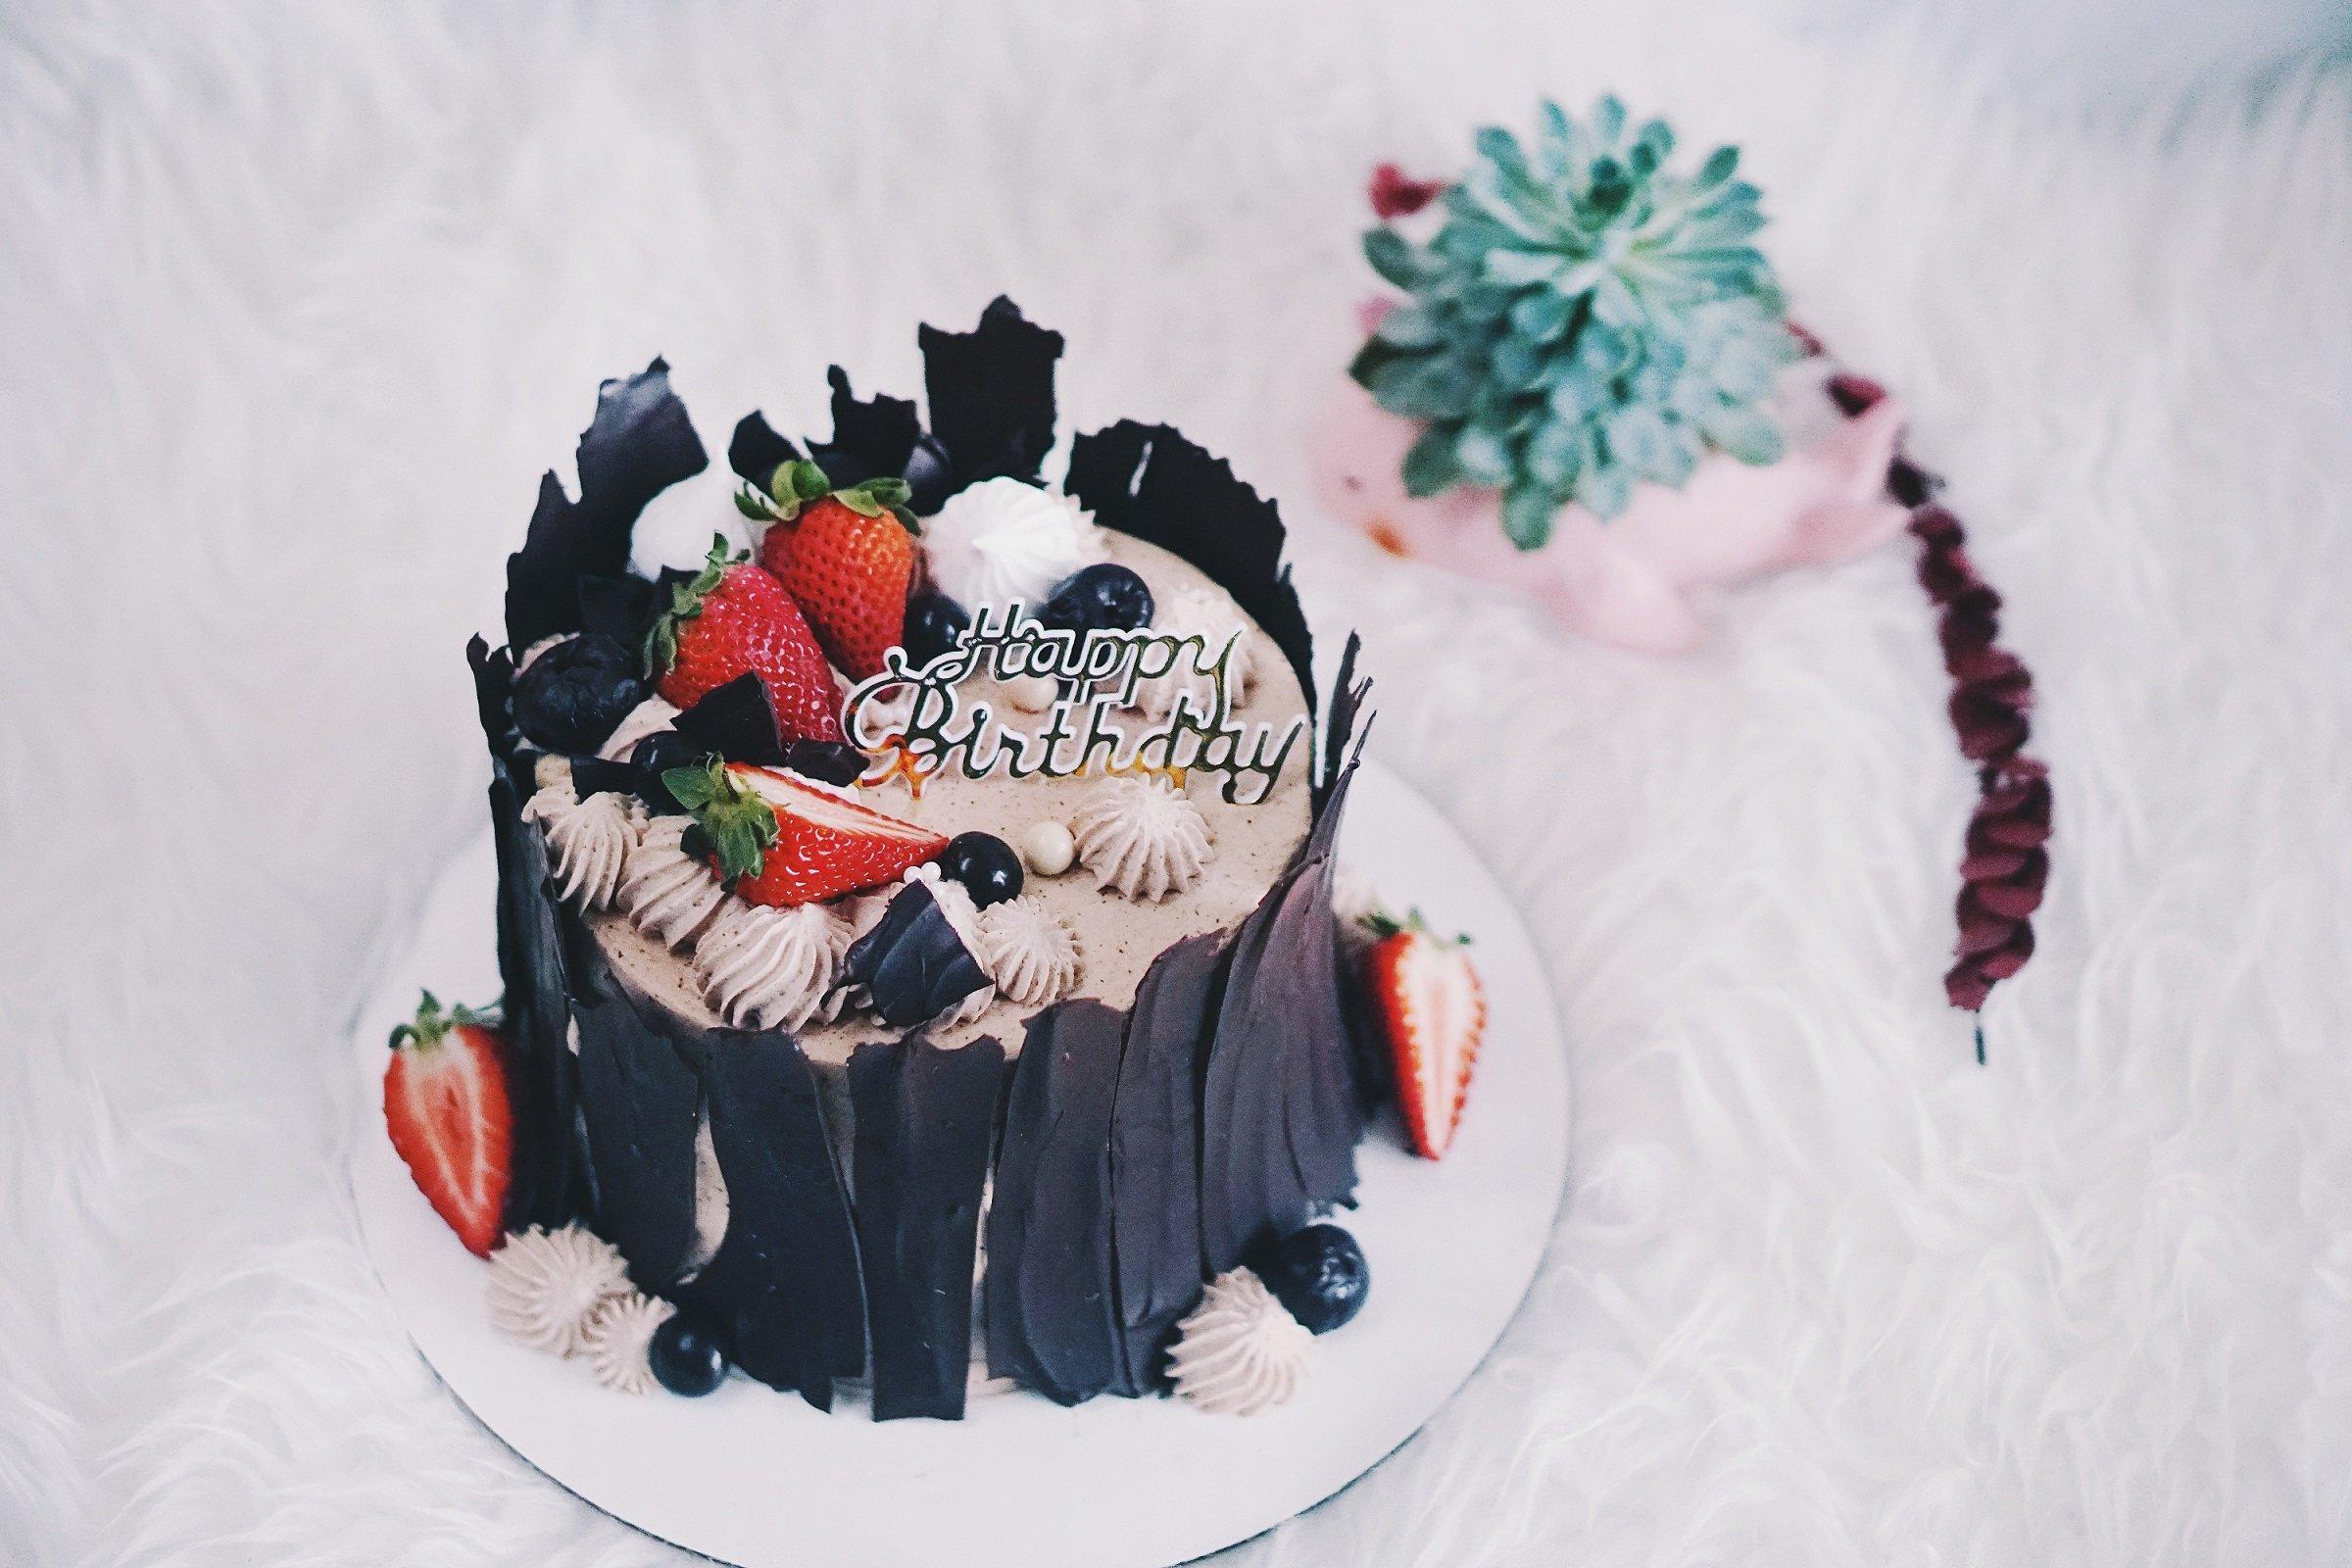 Black Forest - Cake - Dessert - Birthday - Event -The Place Toronto